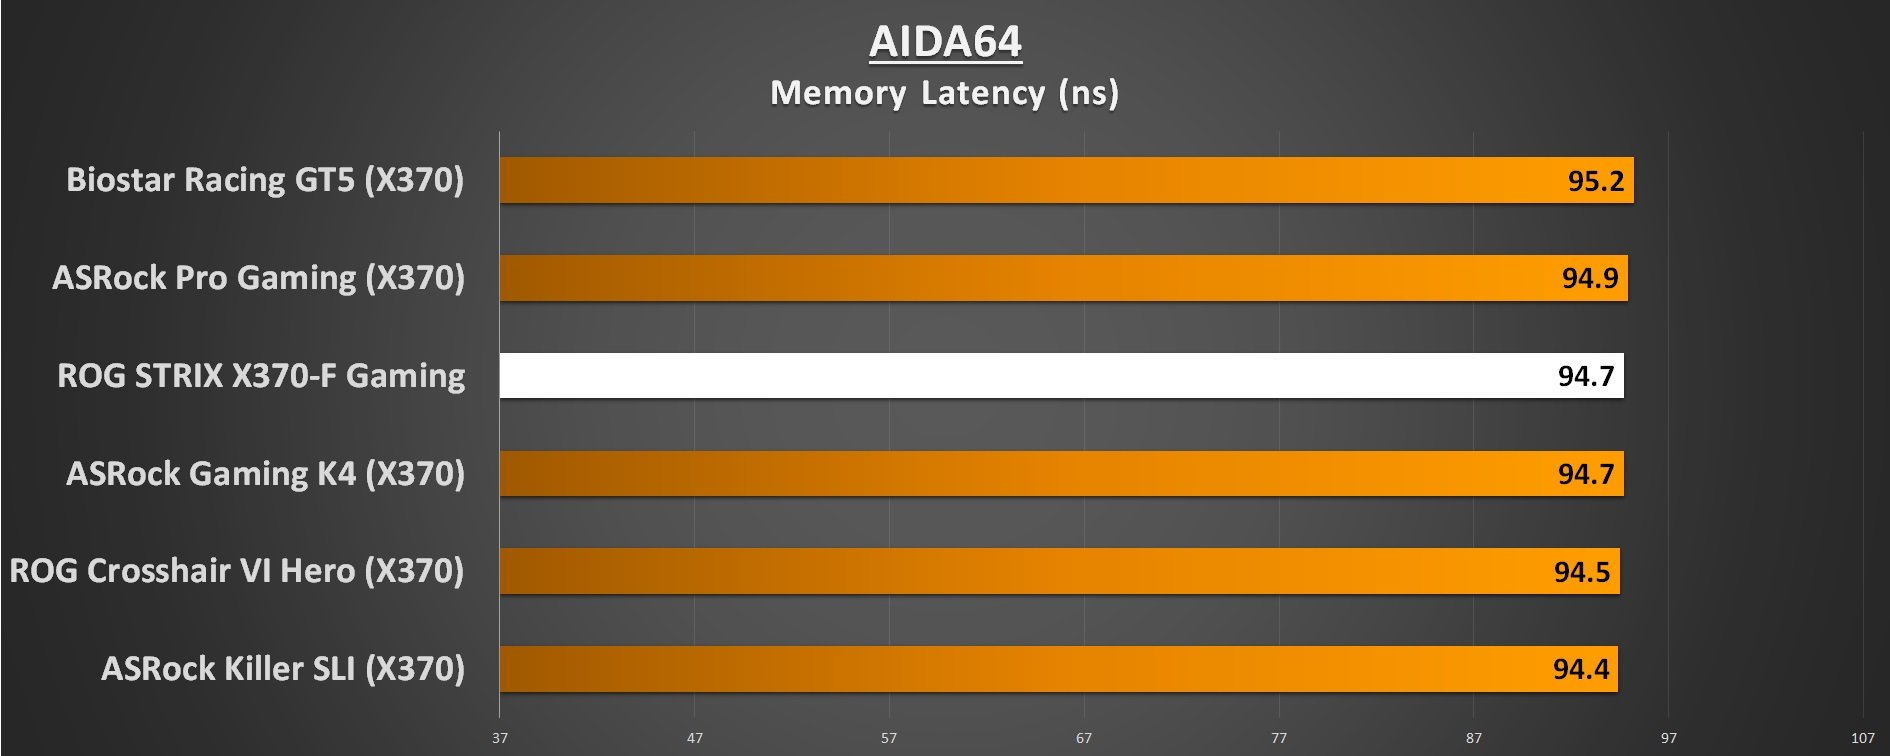 AIDA64 Memory Latency